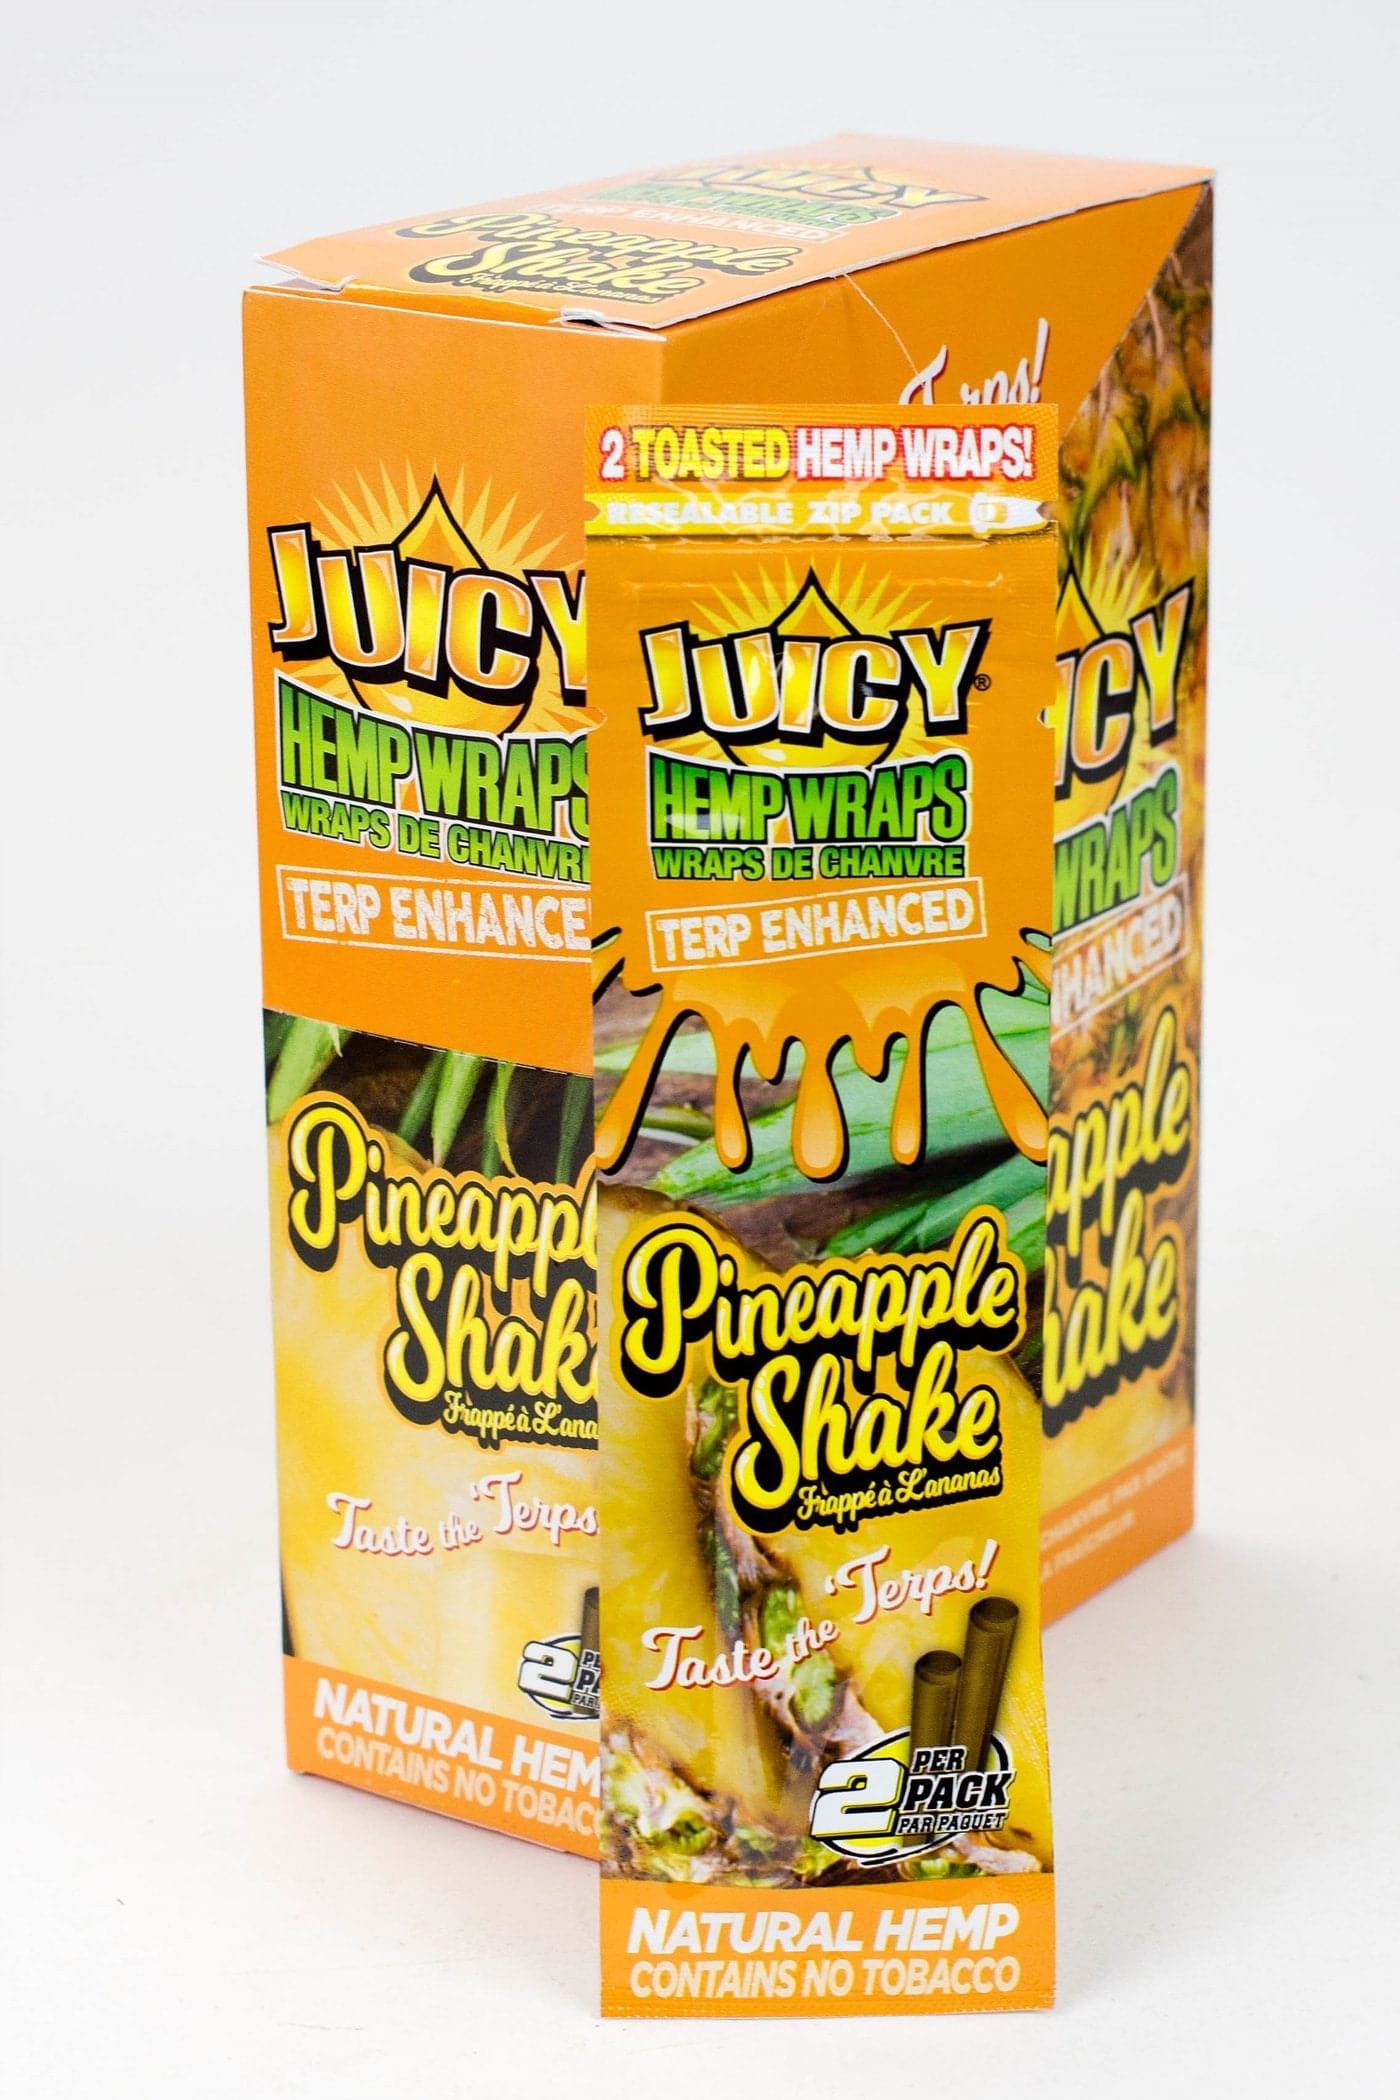 Juicy Jay's Hemp Wraps New flavors